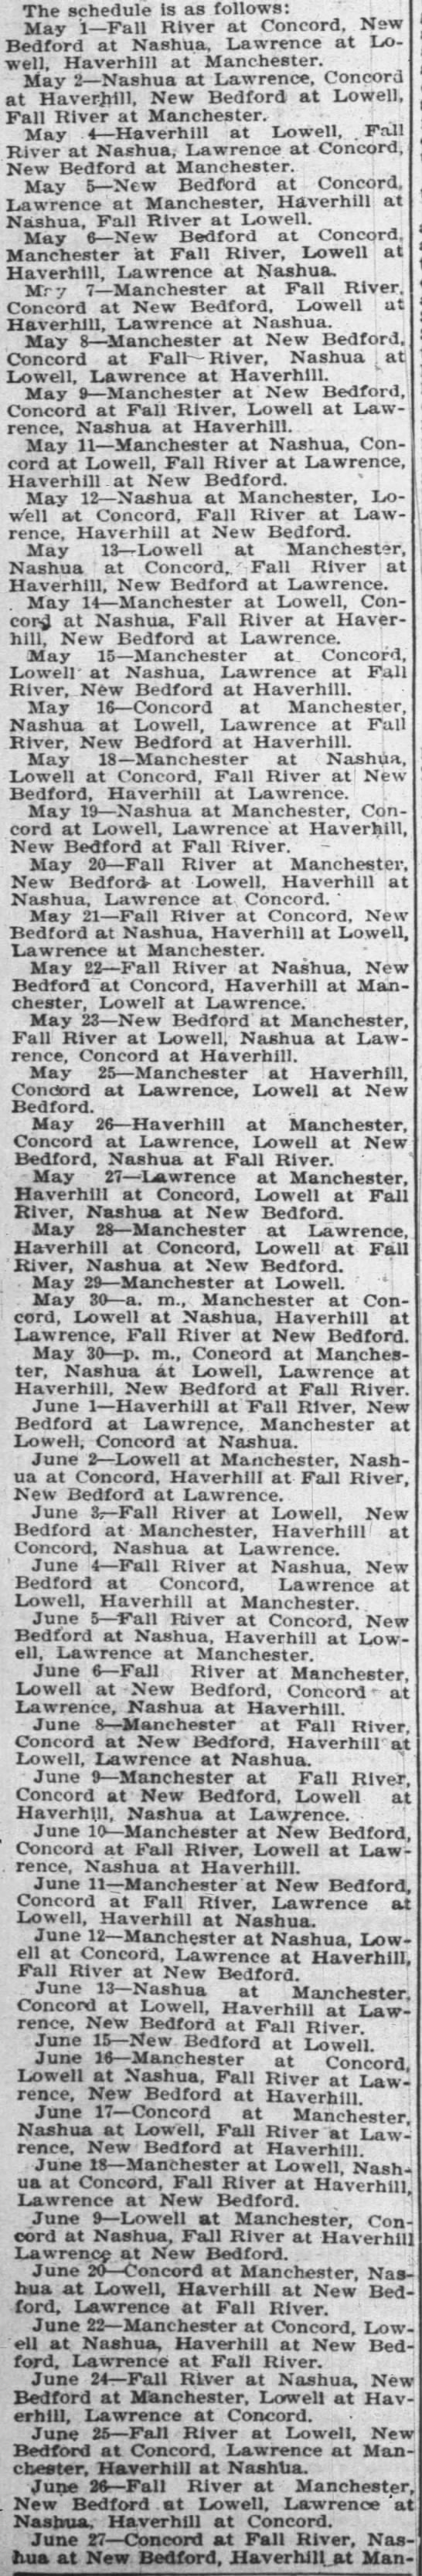 1903 New England League schedule - 